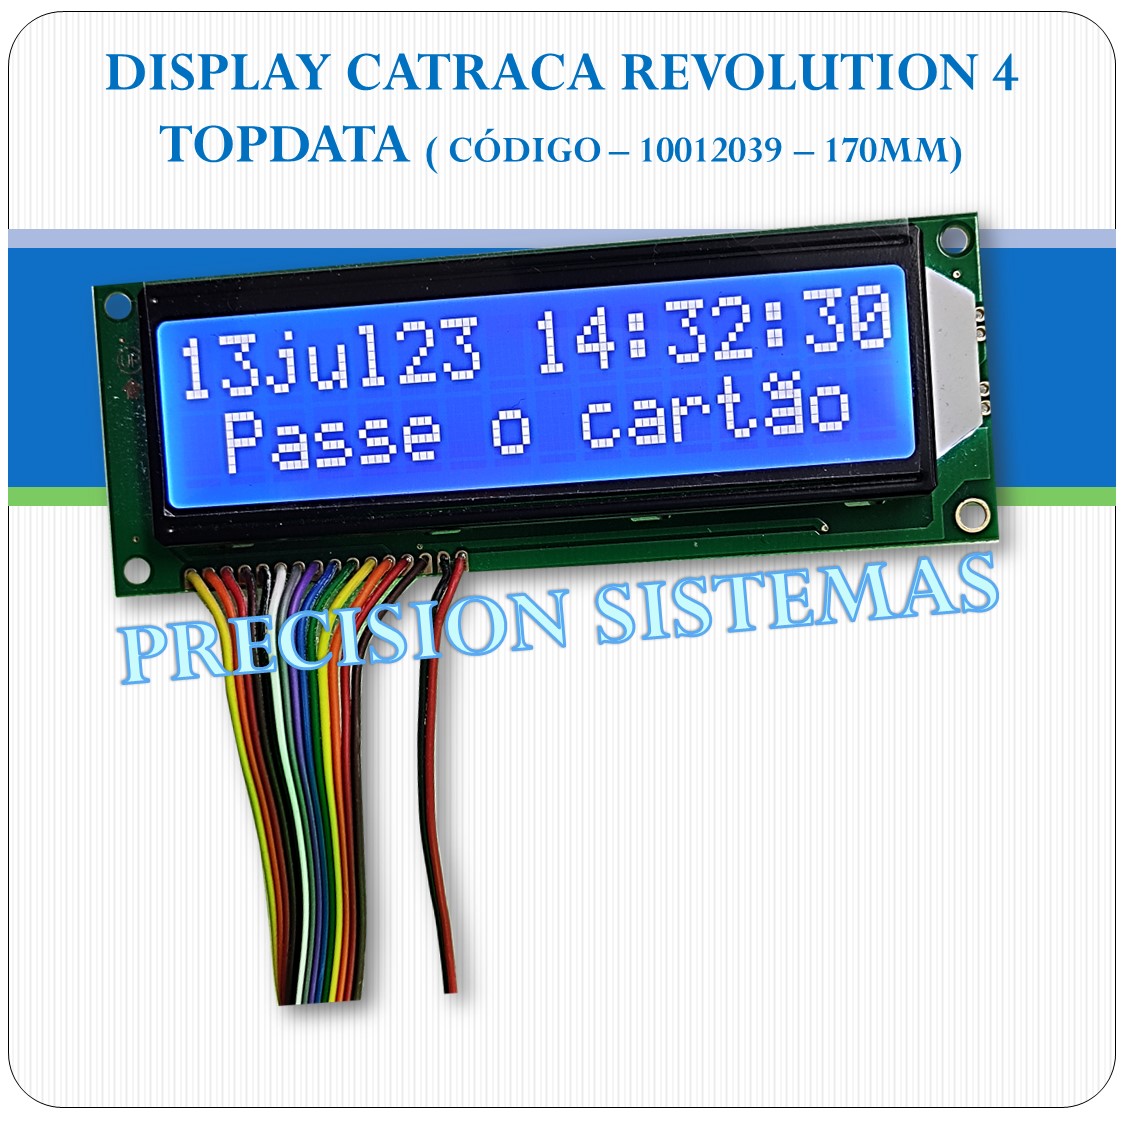 Display Big Number da Catraca Revolution 4 - Topdata